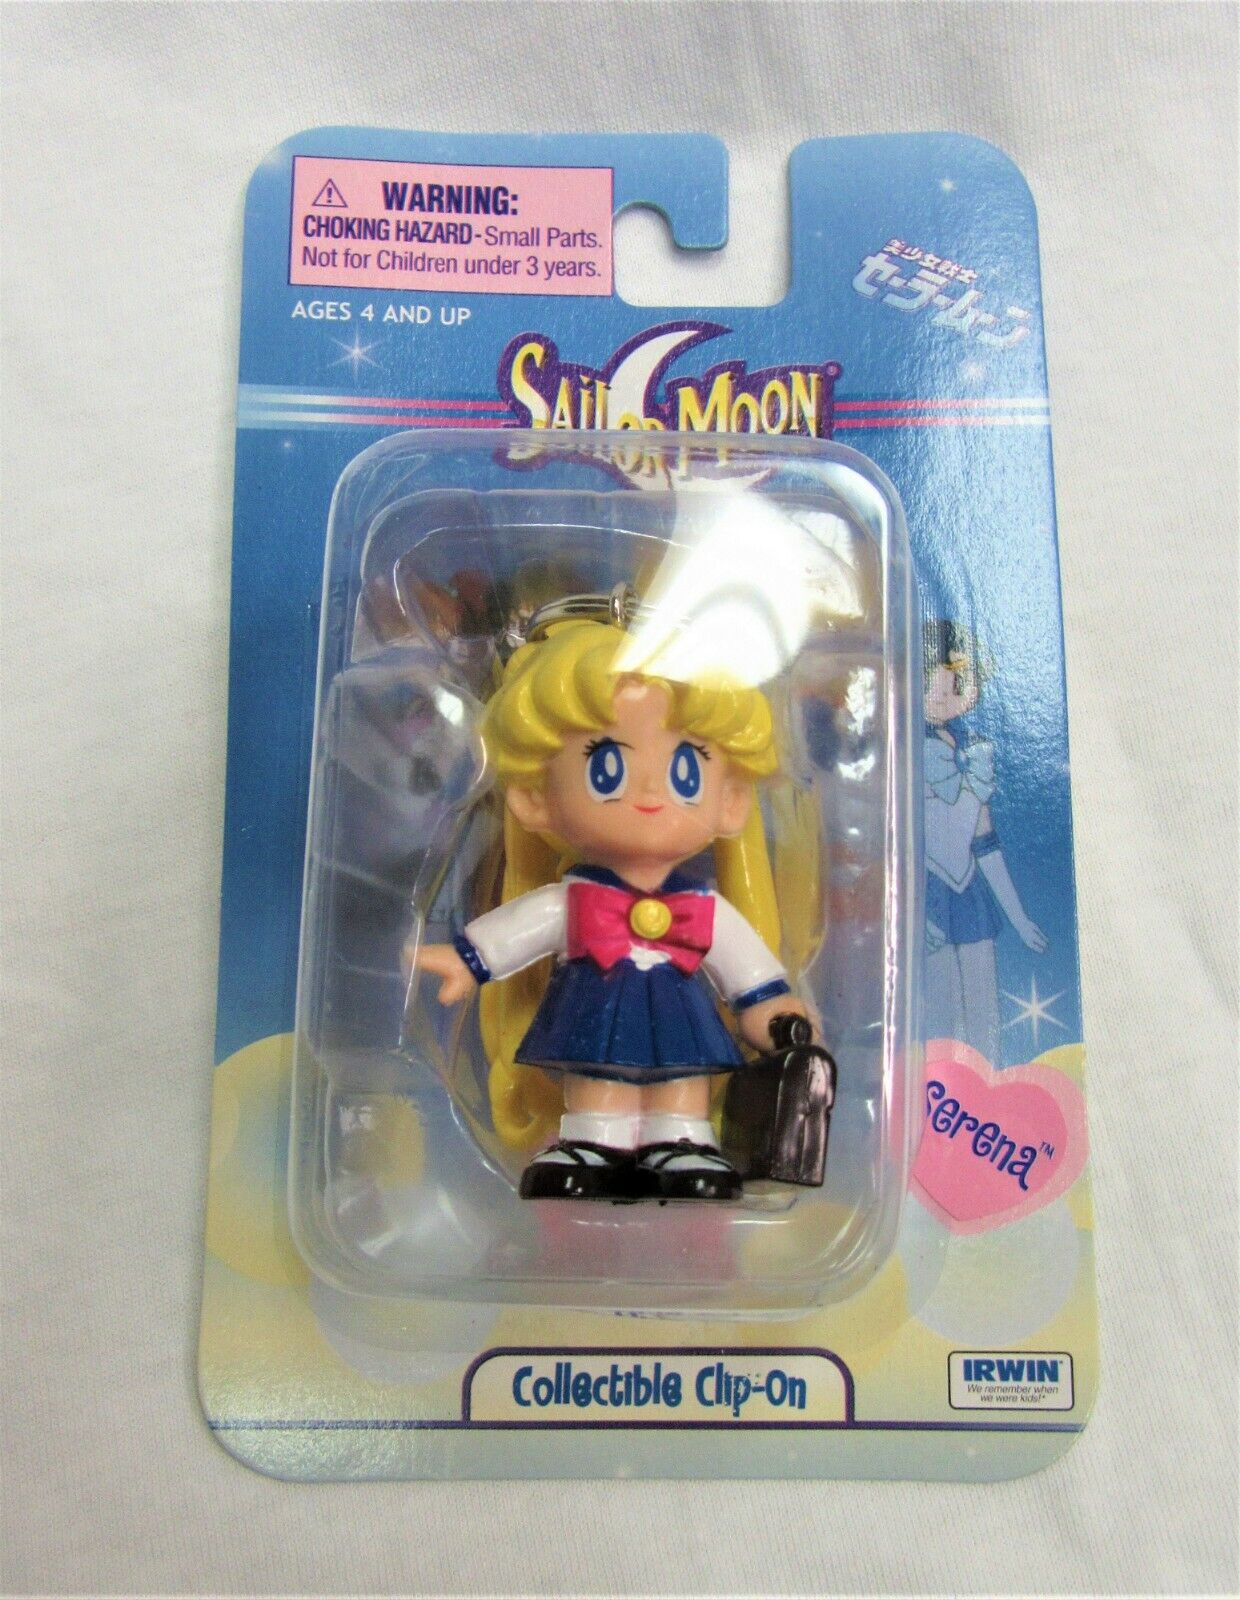 Vintage Collectible Toy, Sailor Moon Figural Collectible Clip-On, Serena